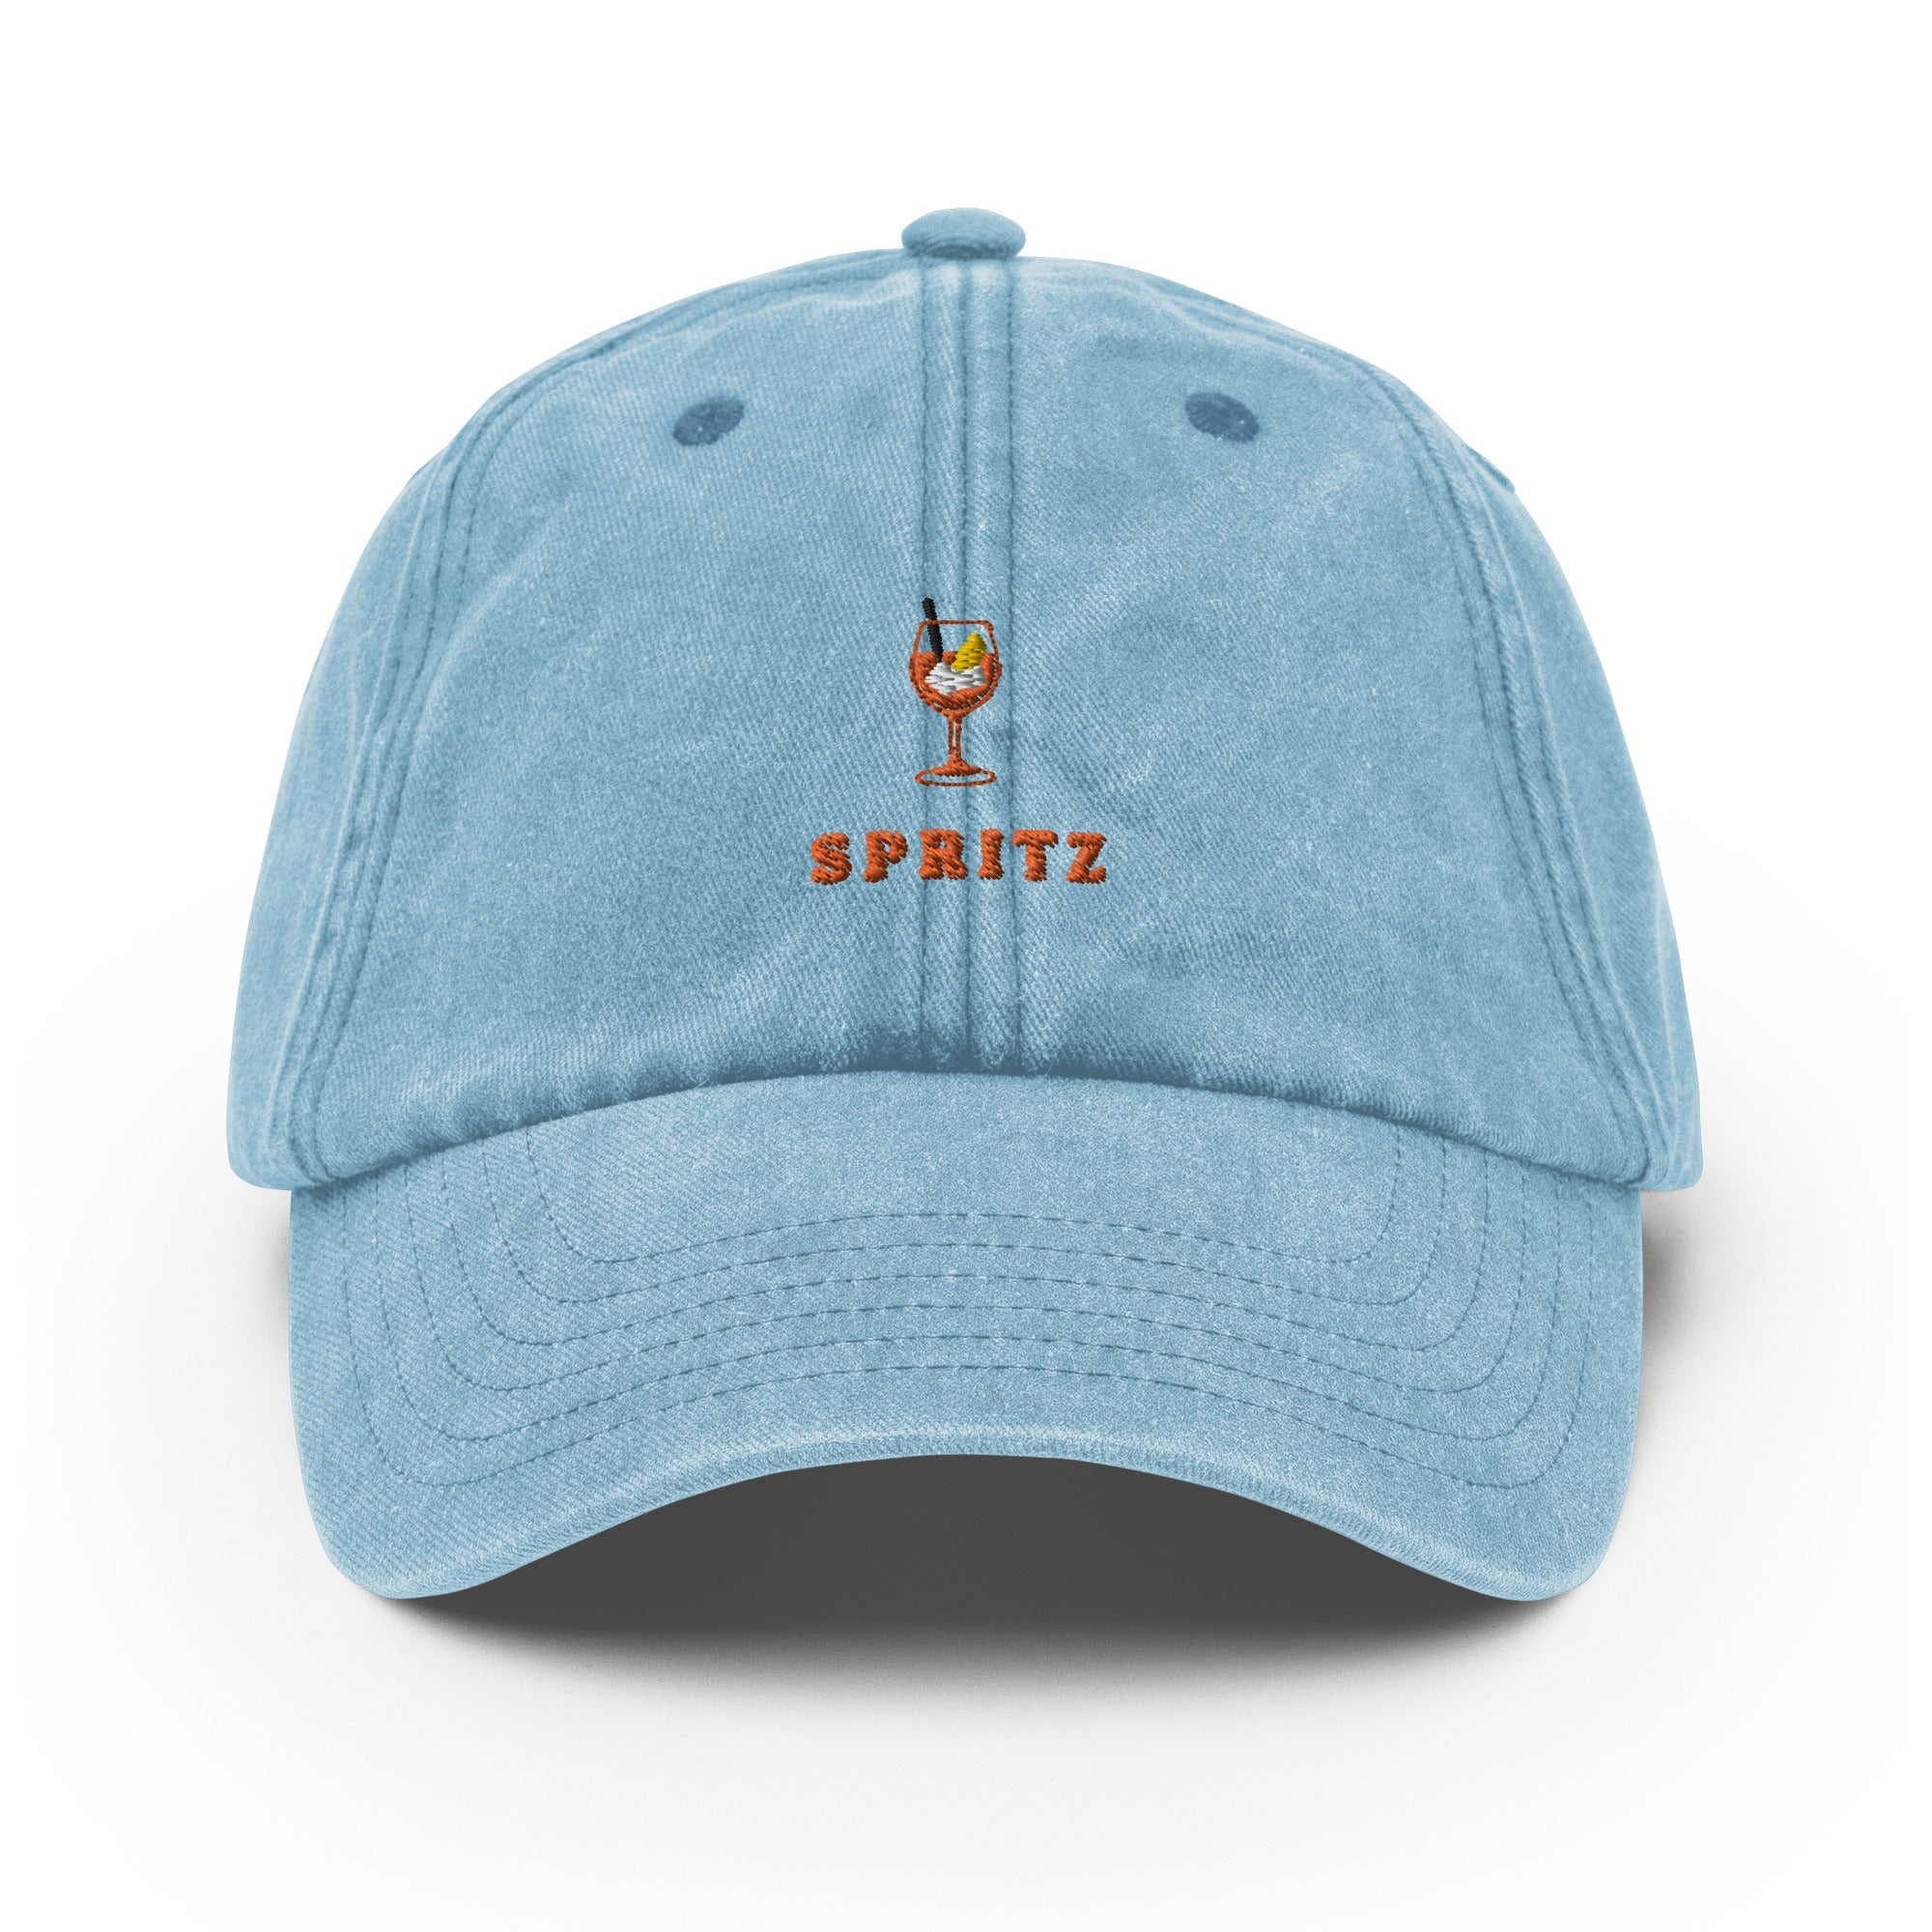 Spritz Vintage Cap - The Refined Spirit